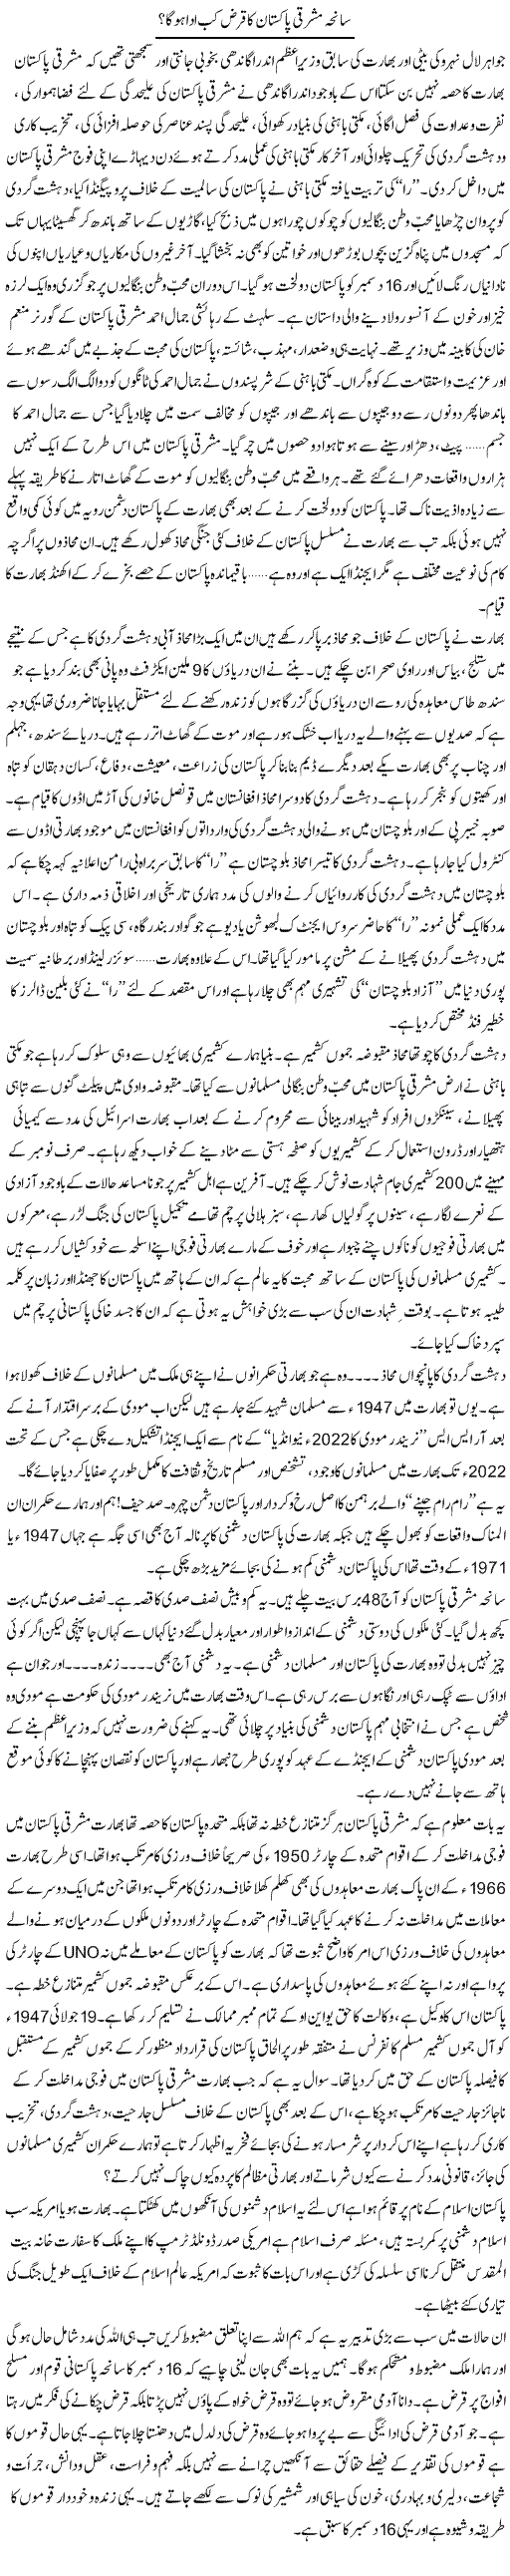 Saneha Mashriqi Pakistan Ka Qarz Kab Ada Hoga? | Hafiz Muhammad Saeed | Daily Urdu Columns